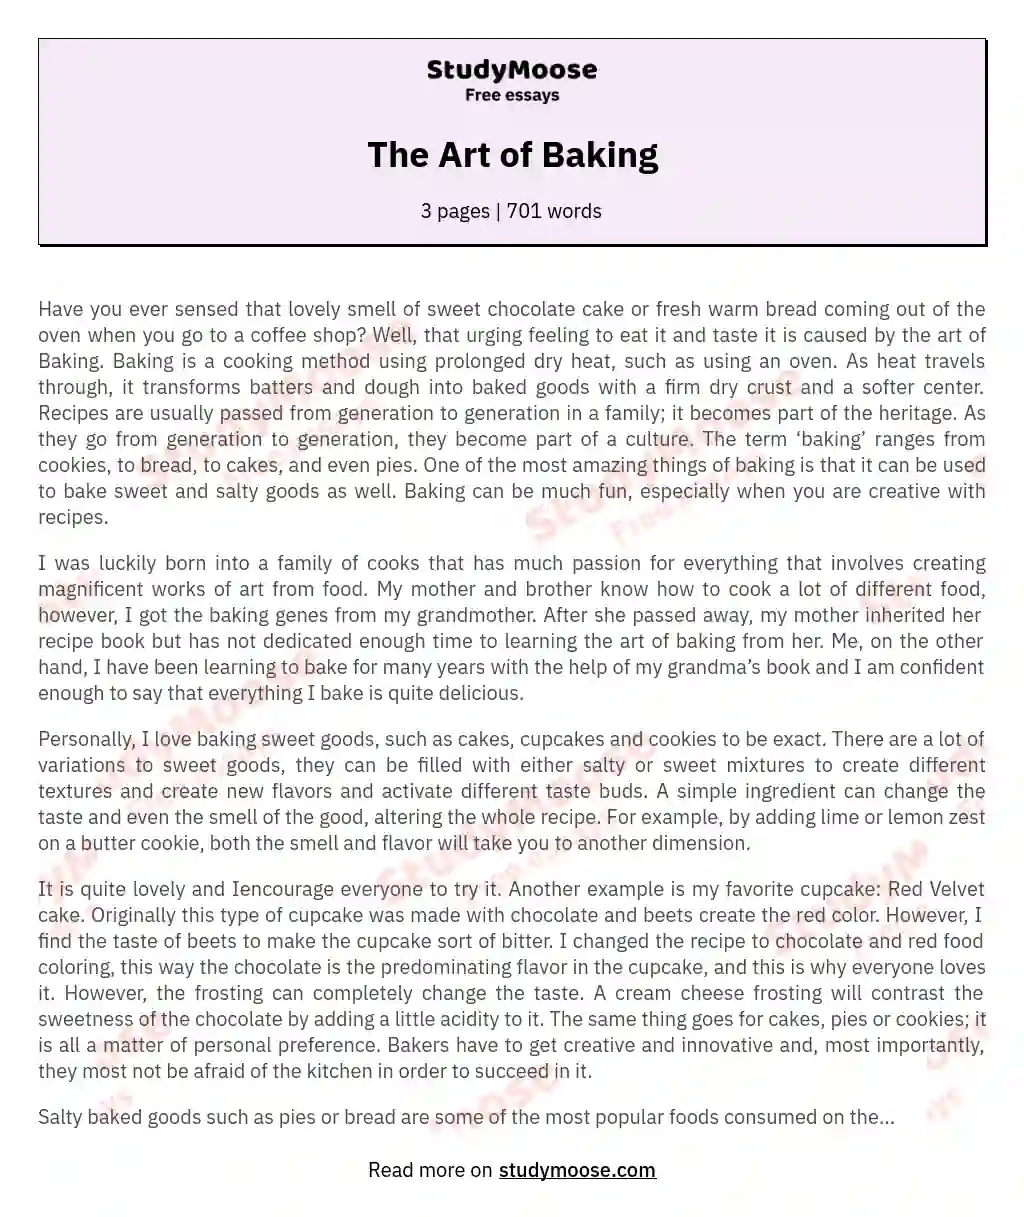 The Art of Baking essay